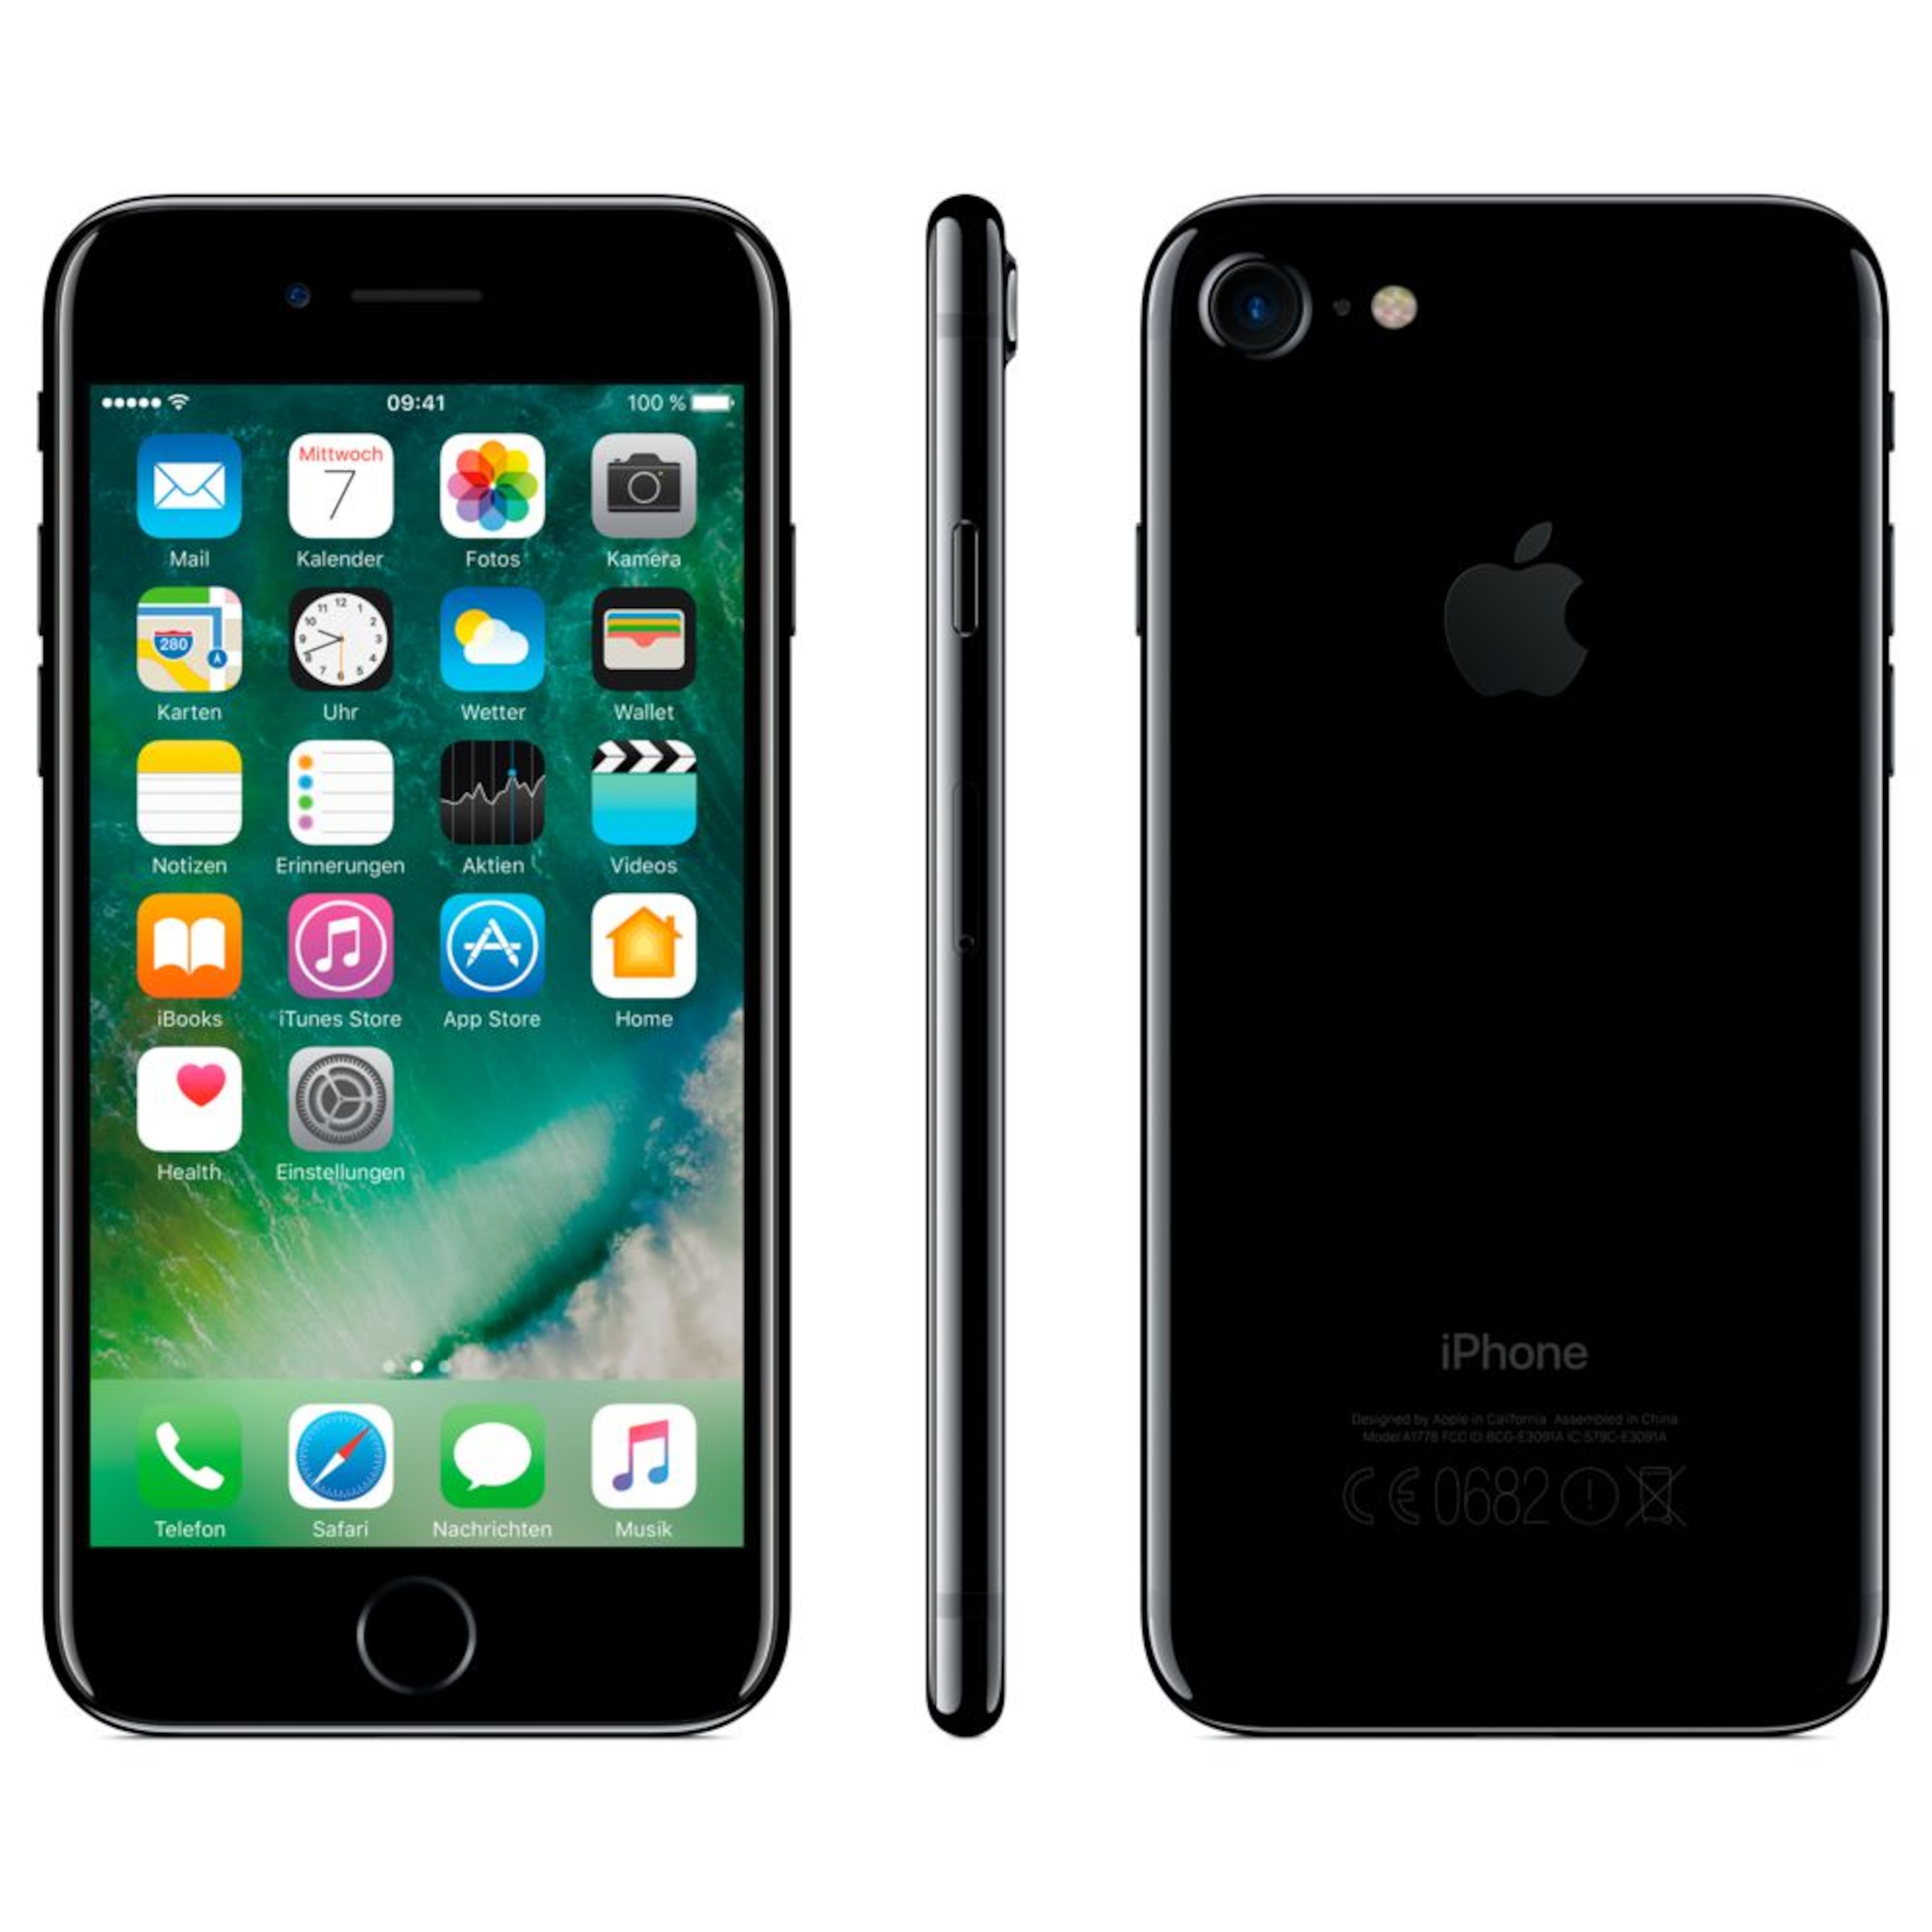 APPLE iPhone 7 Plus Smartphone, 13,97 cm (5,5'') Retina HD Display, iOS 10, 32 GB Speicher, Quad-Core-Prozessor, LTE (B-Ware)